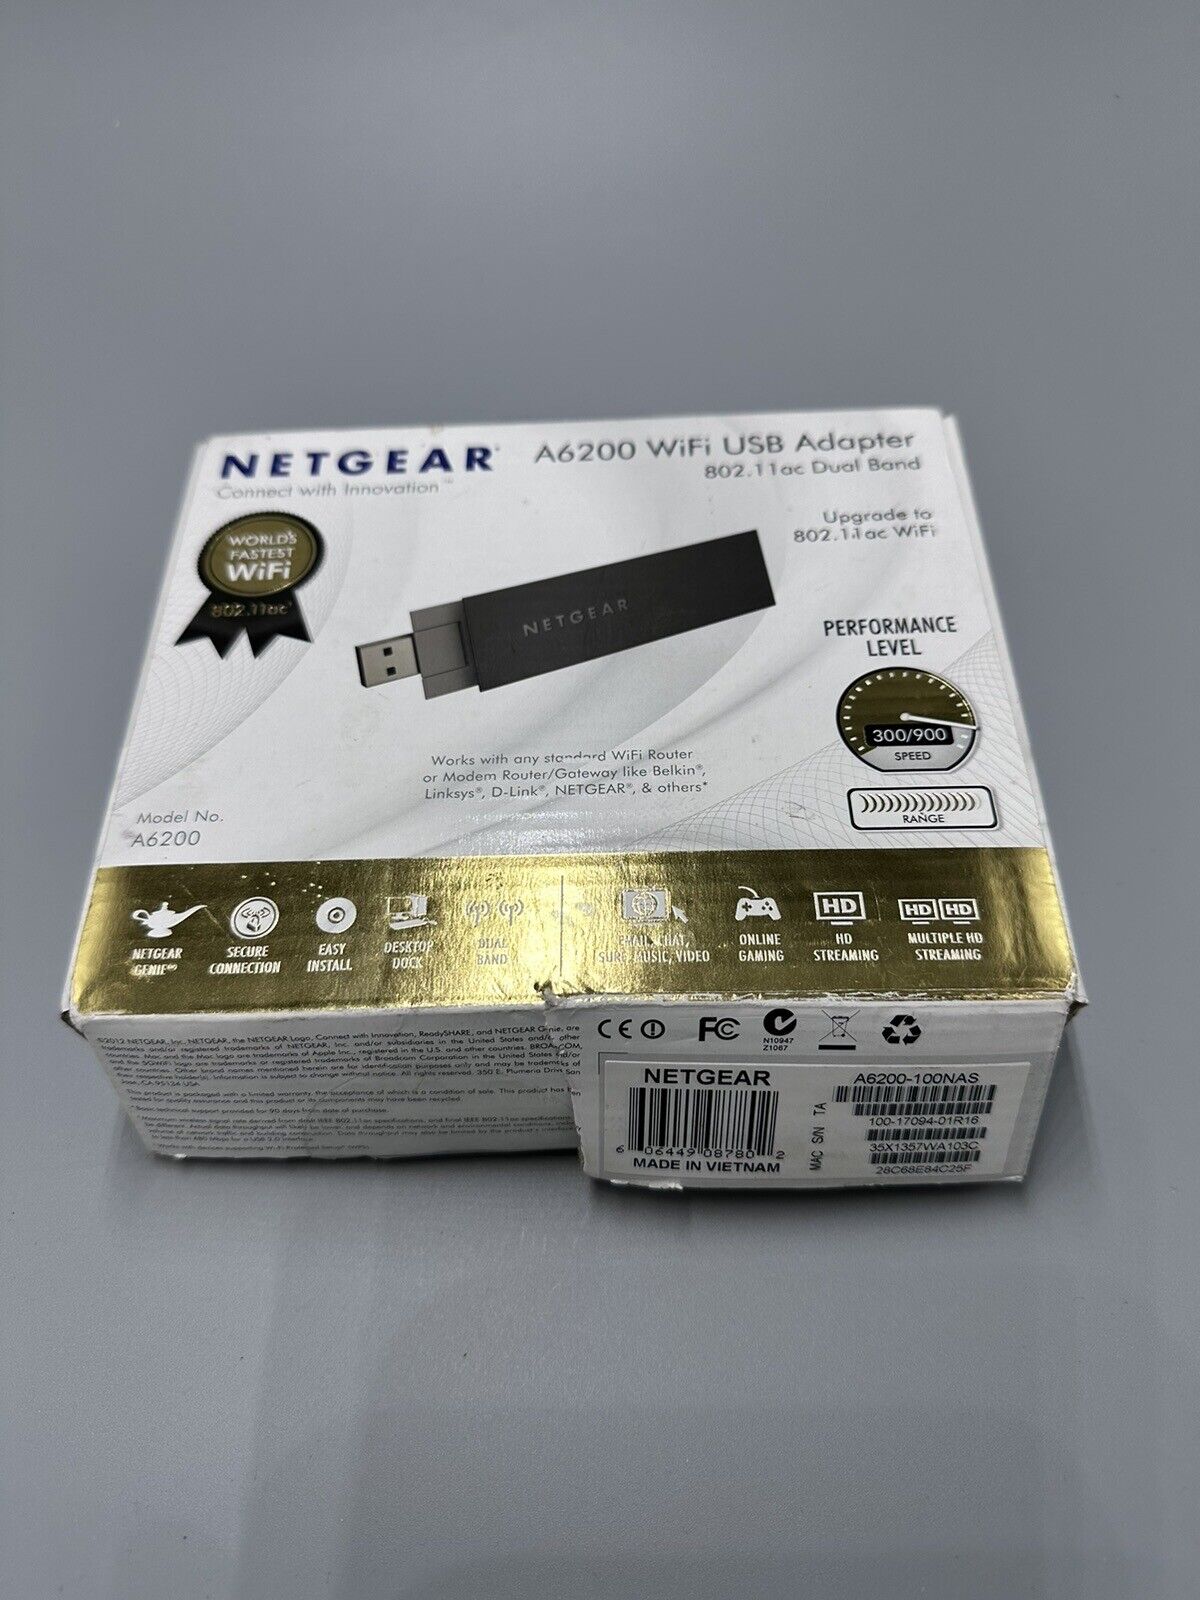 NetGear A6200-100NAS WiFi USB Adapter AC1200 Dual Band Gigabit 802.11ac